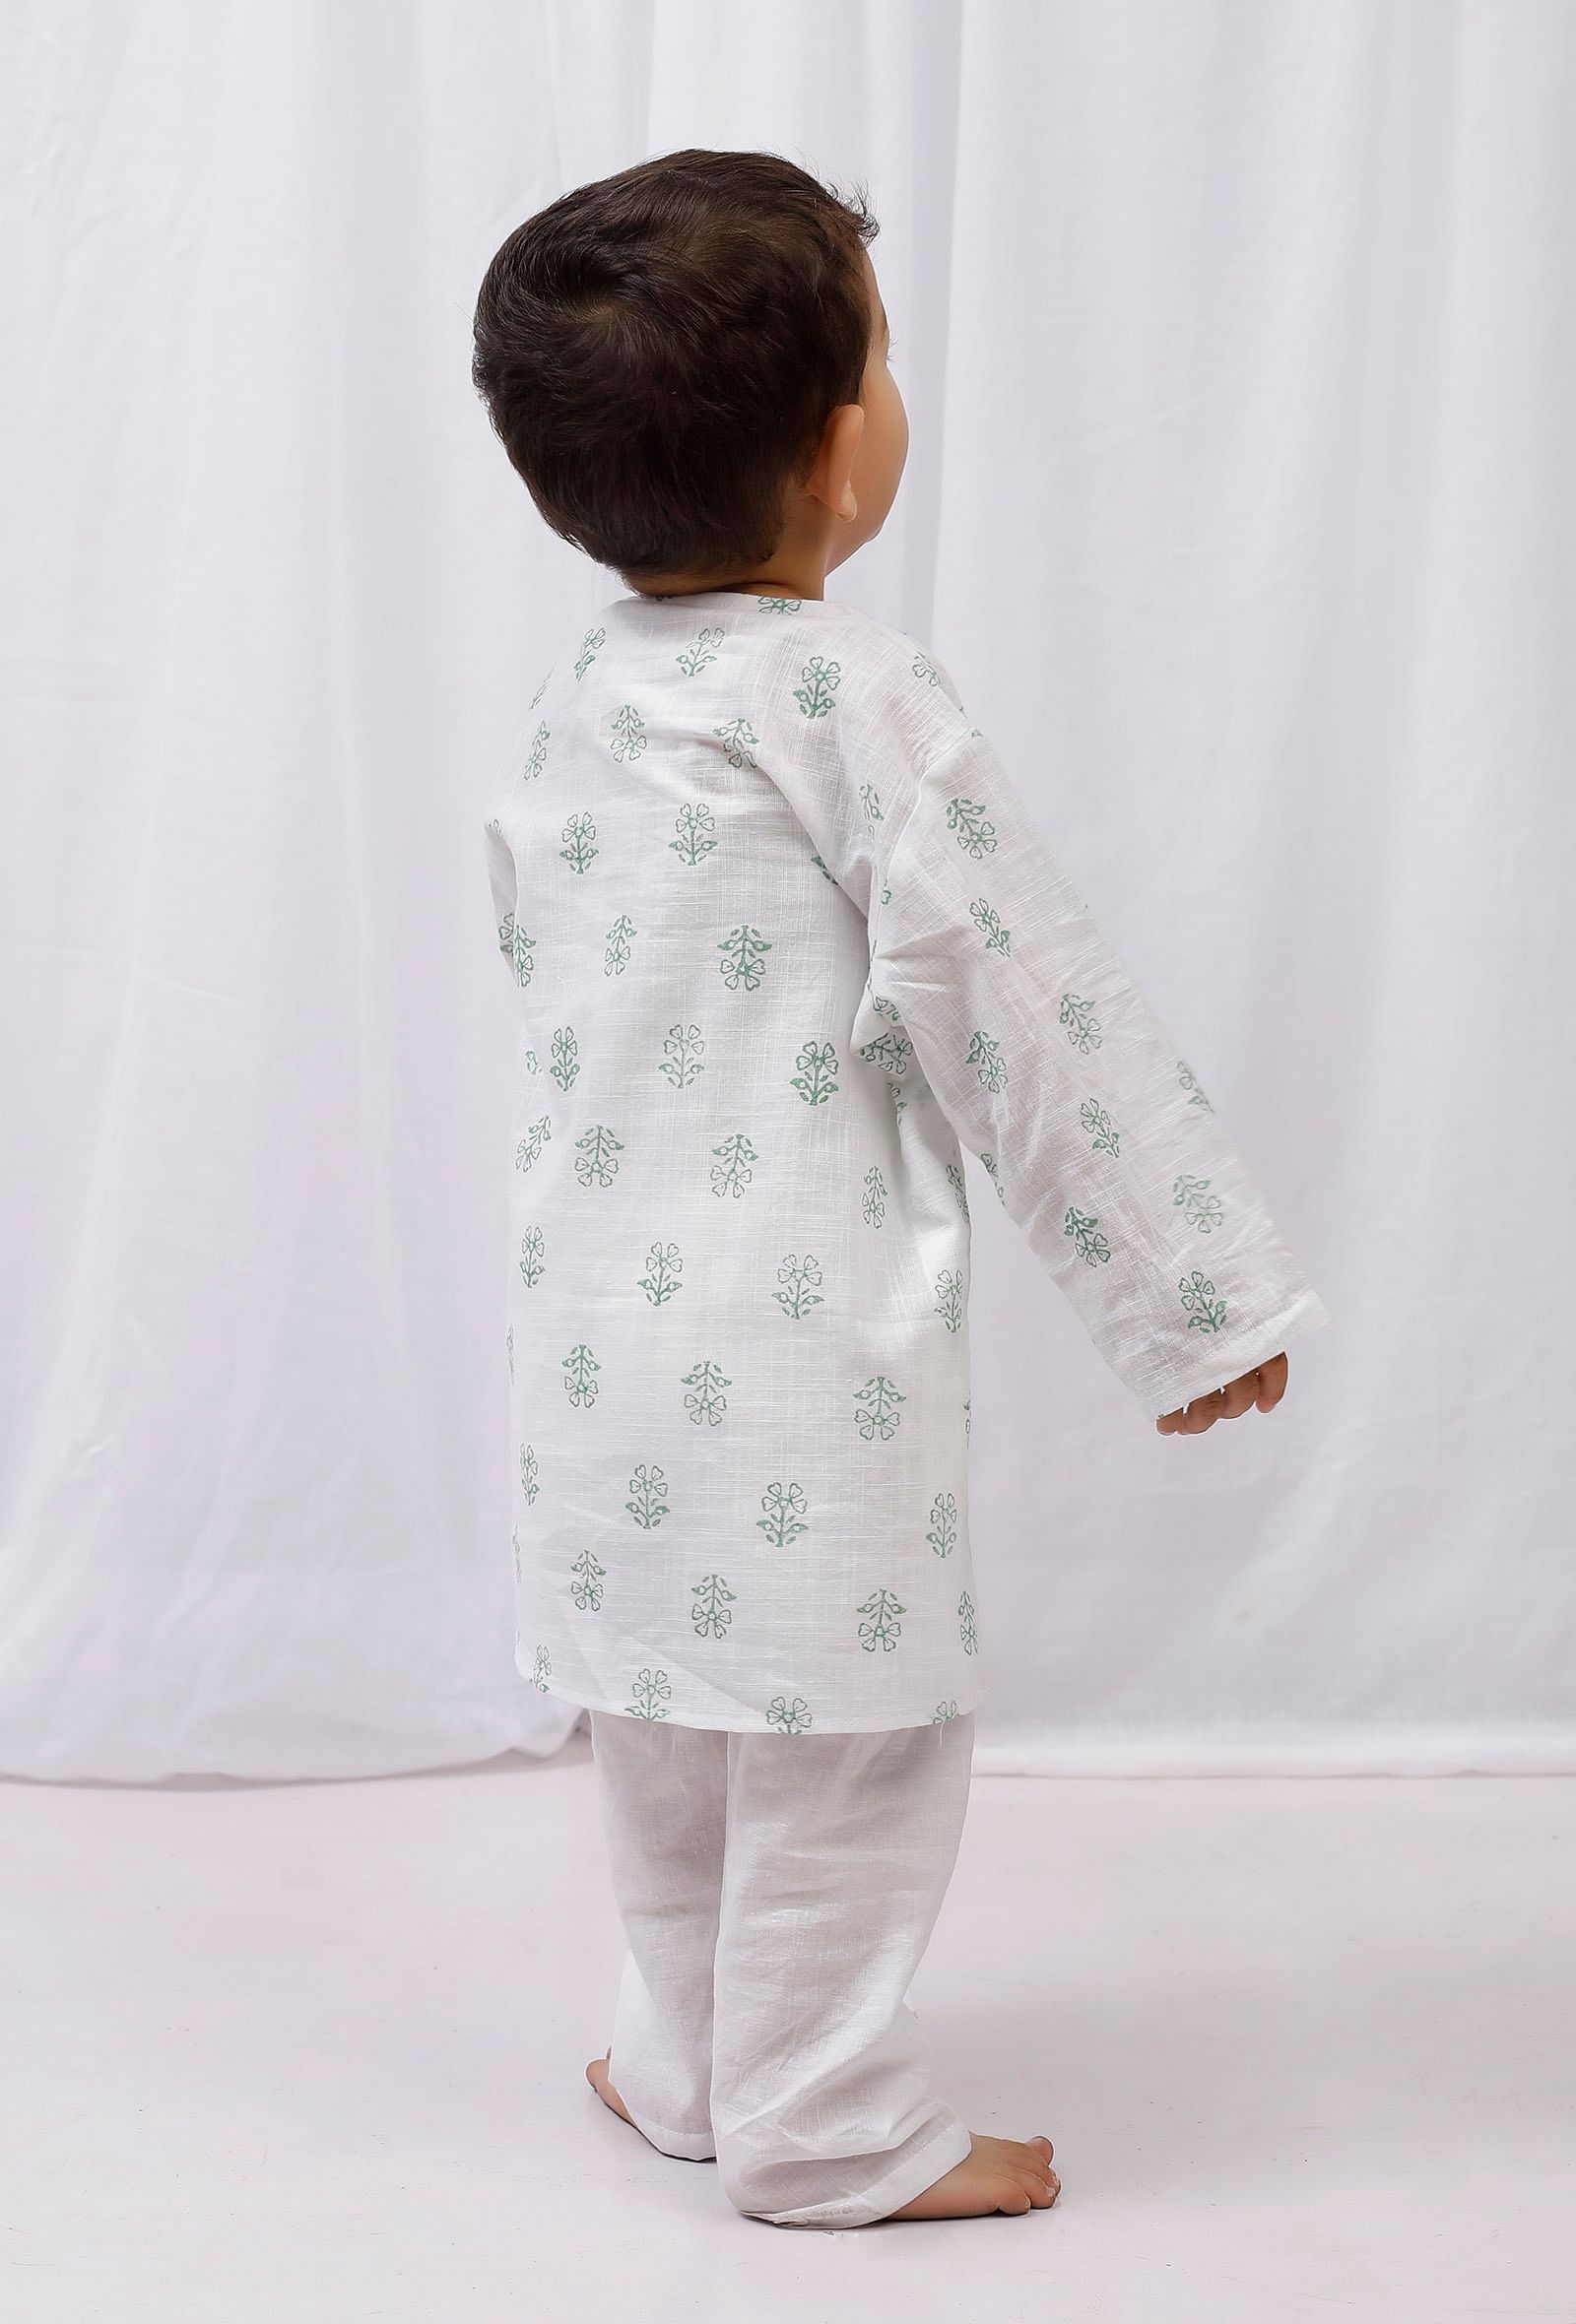 Set of 2: Green Hand Block Printed Cotton Kurta and White Pajama Set